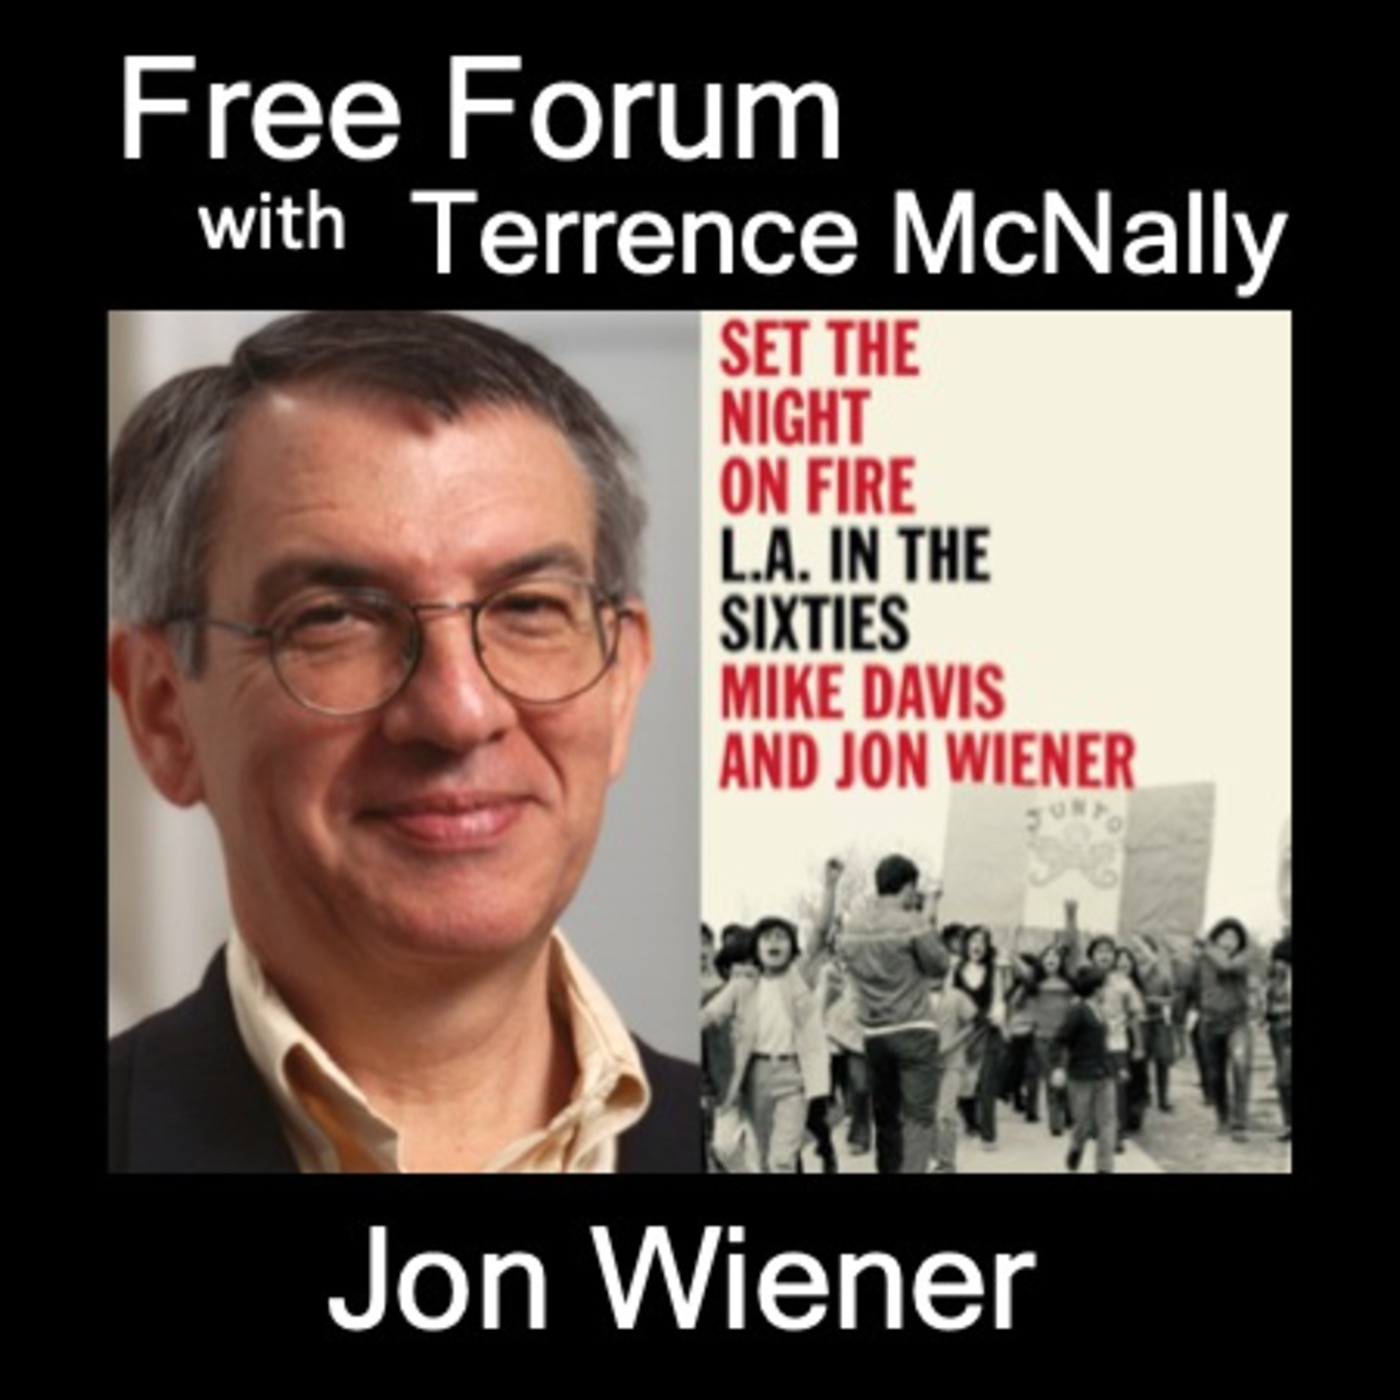 JON WIENER, Set the Night on Fire: L.A. in the Sixties